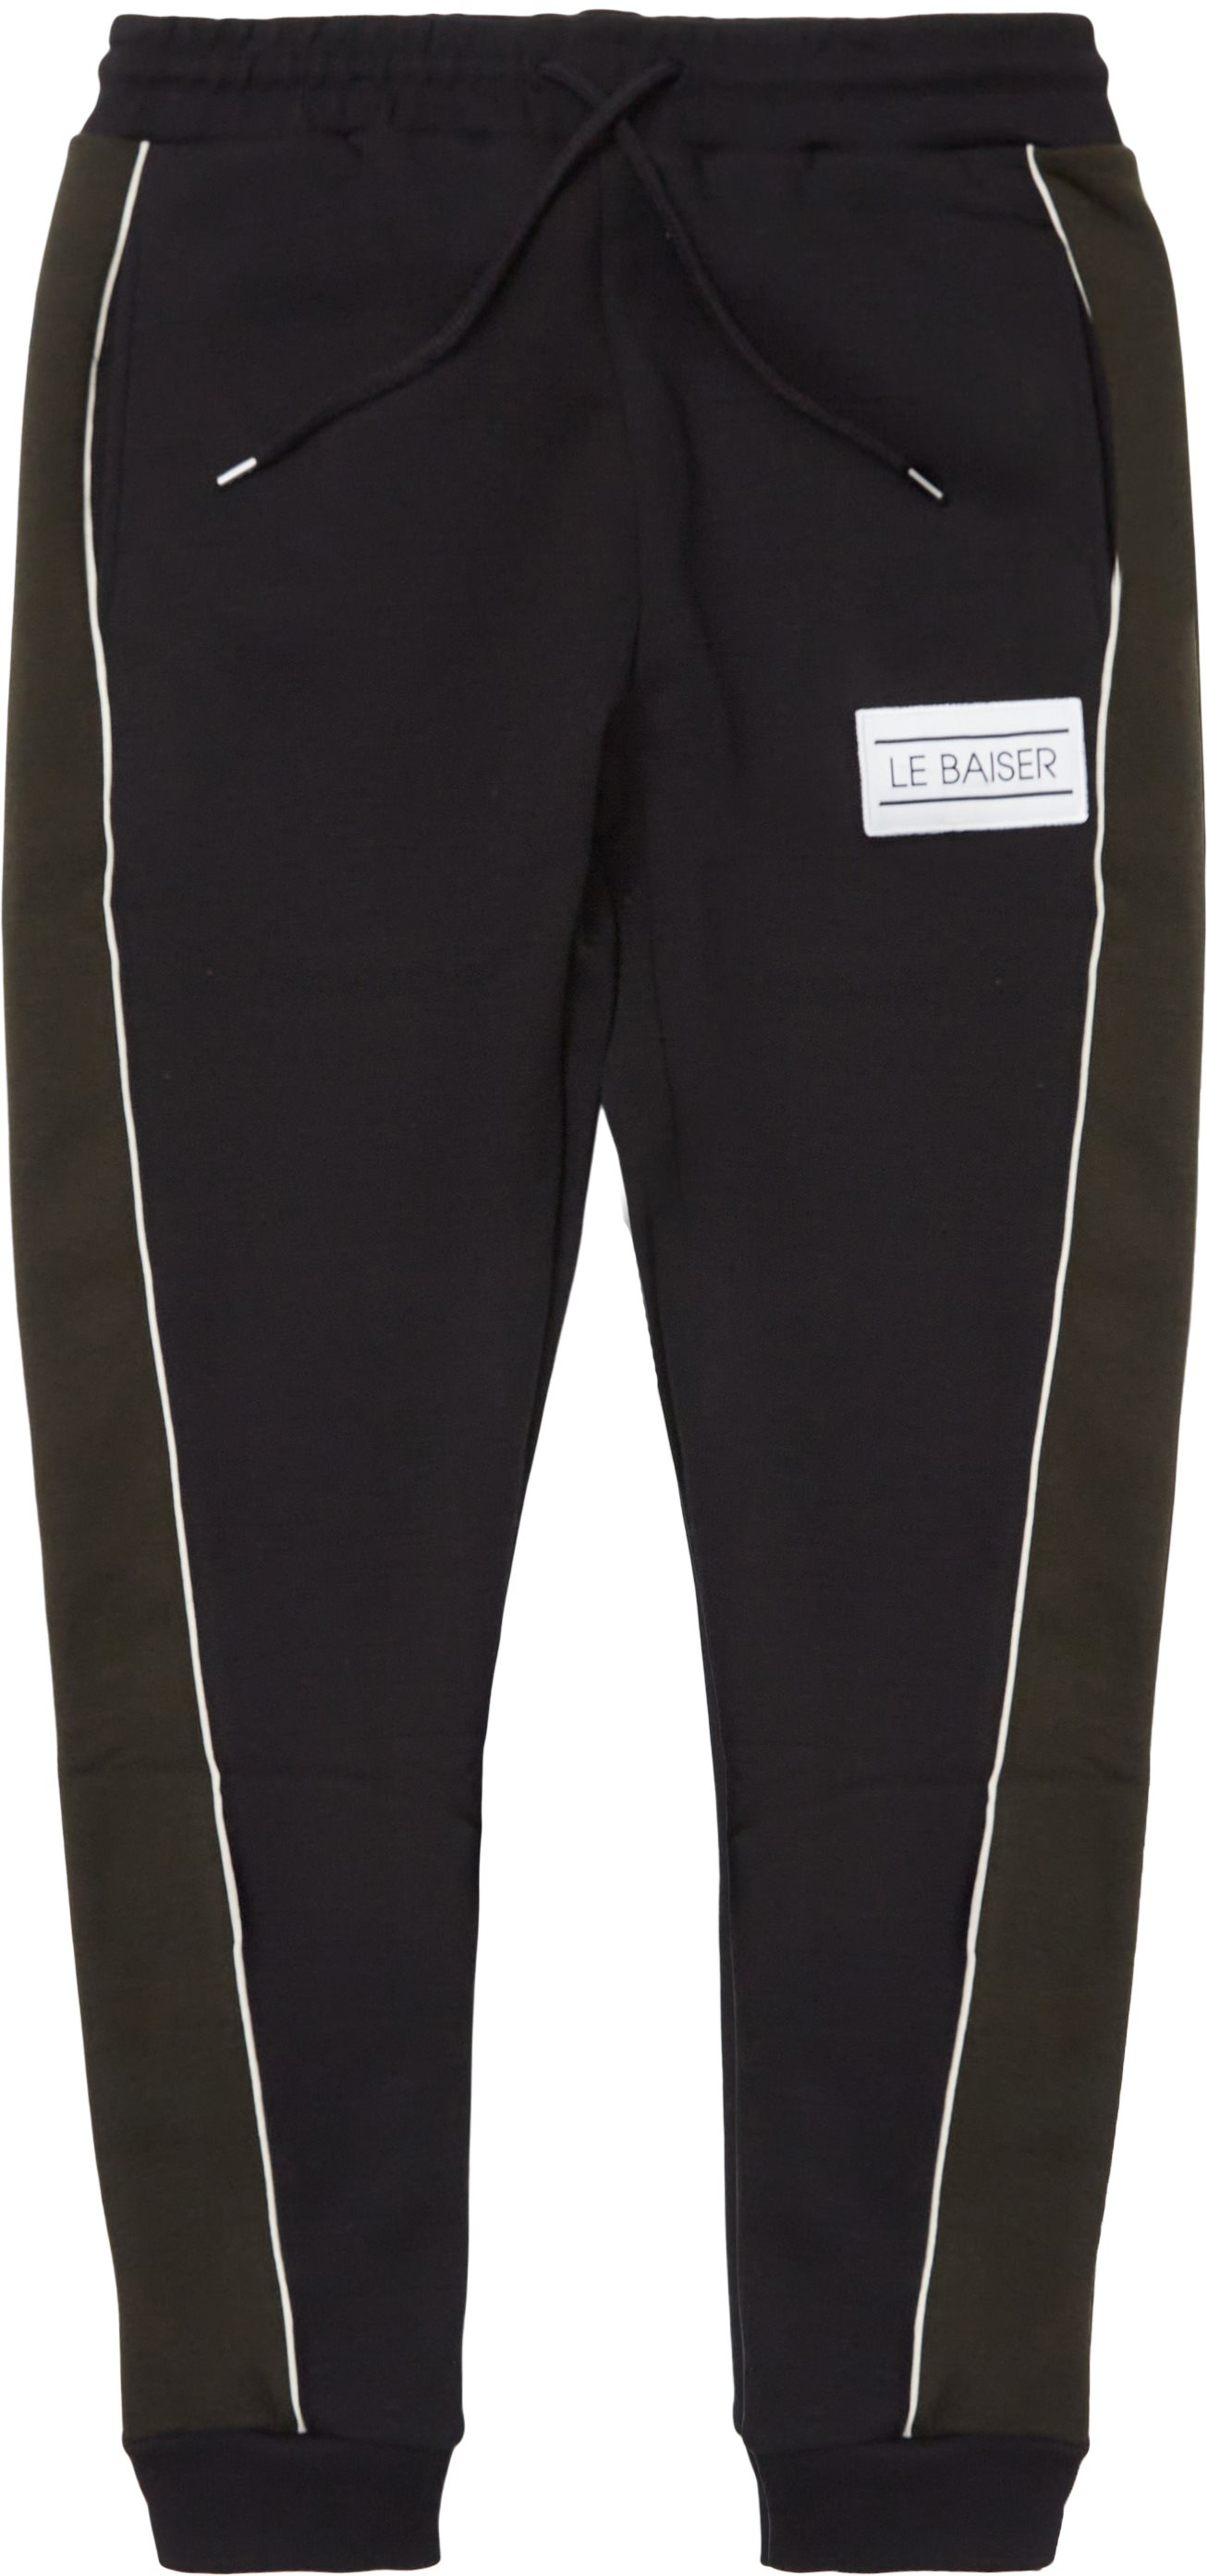 MOUSTEY sweatpants - Trousers - Regular fit - Black